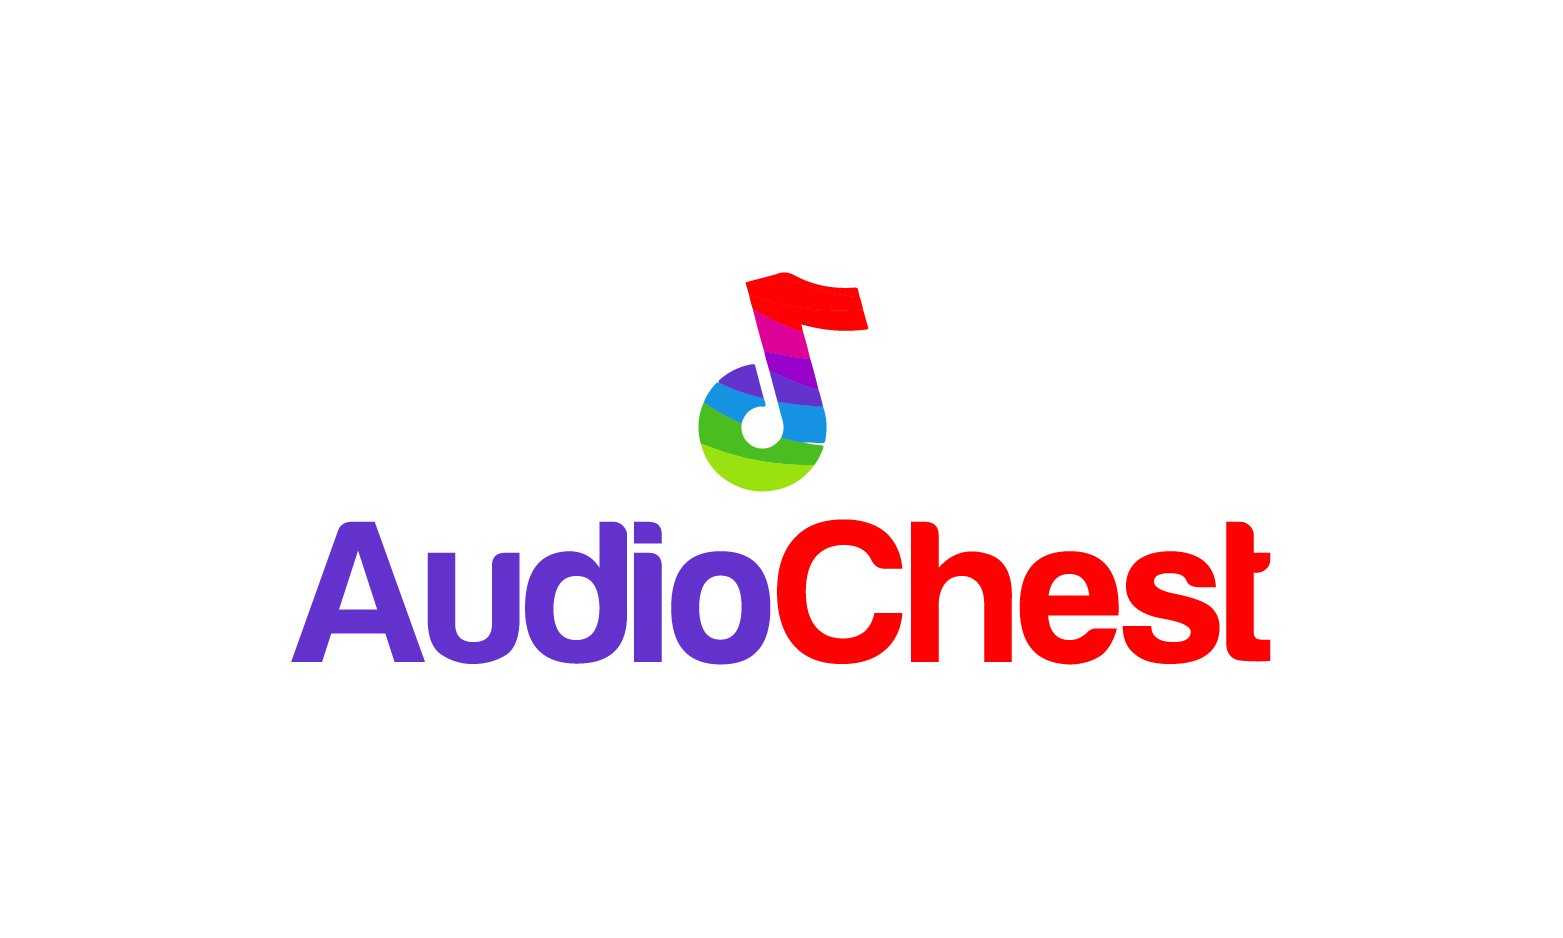 AudioChest.com - Creative brandable domain for sale